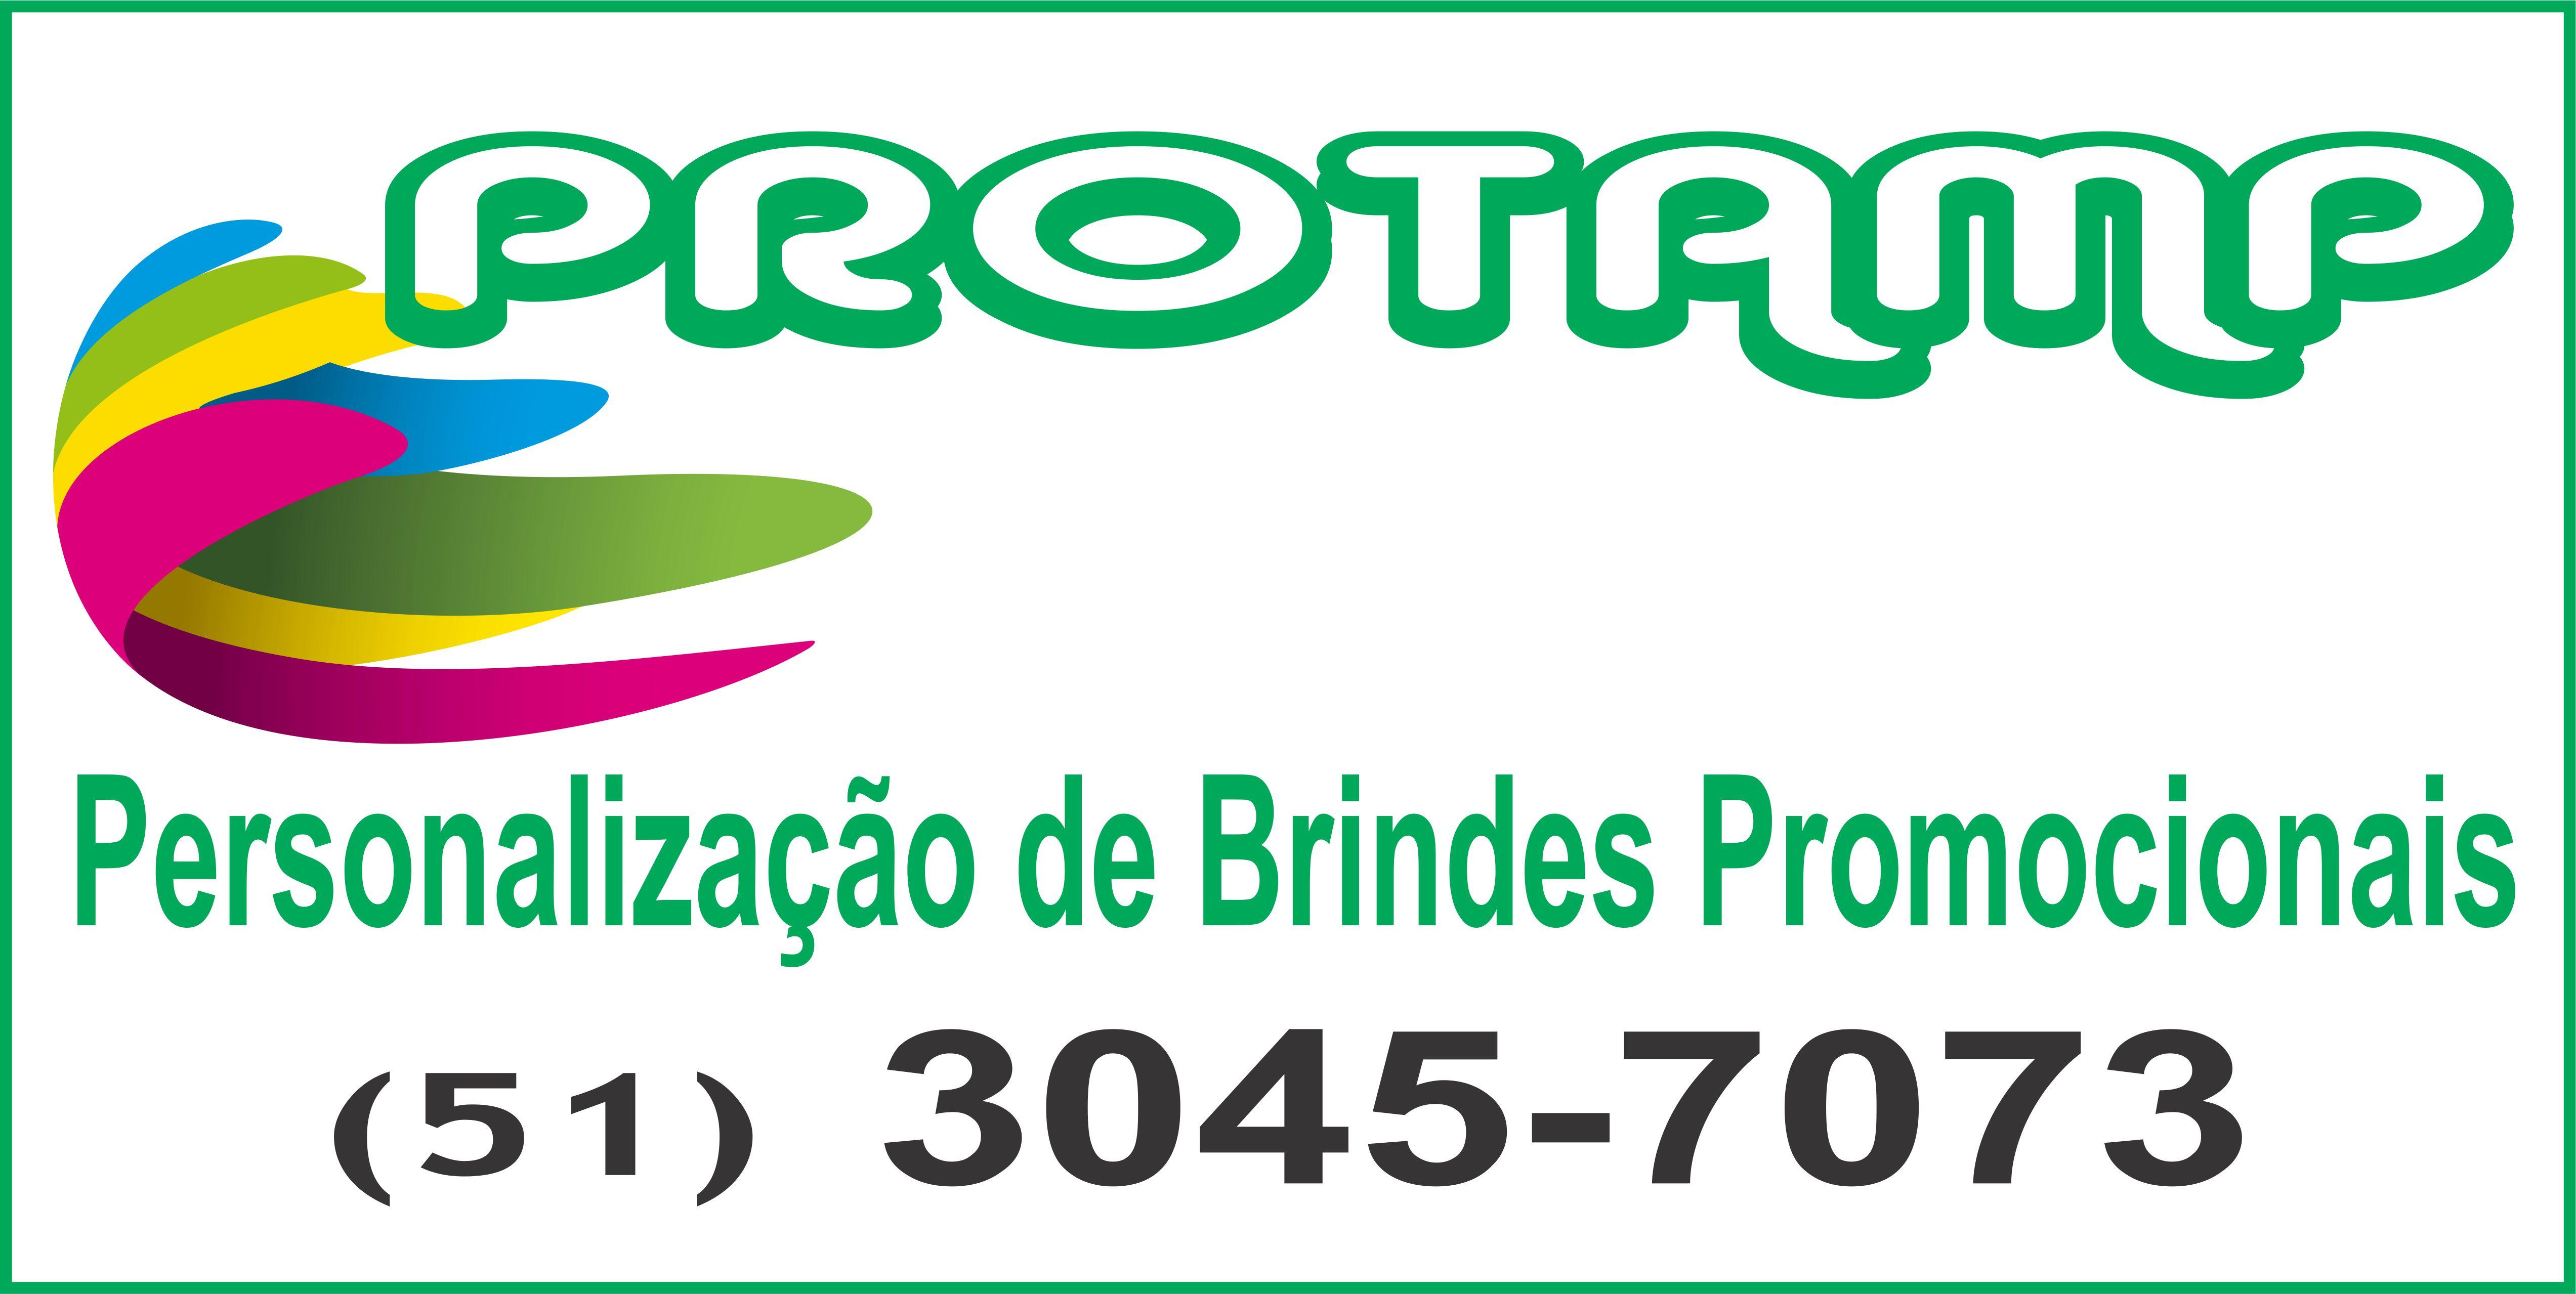 Protamp - Brindes Promocionais logo